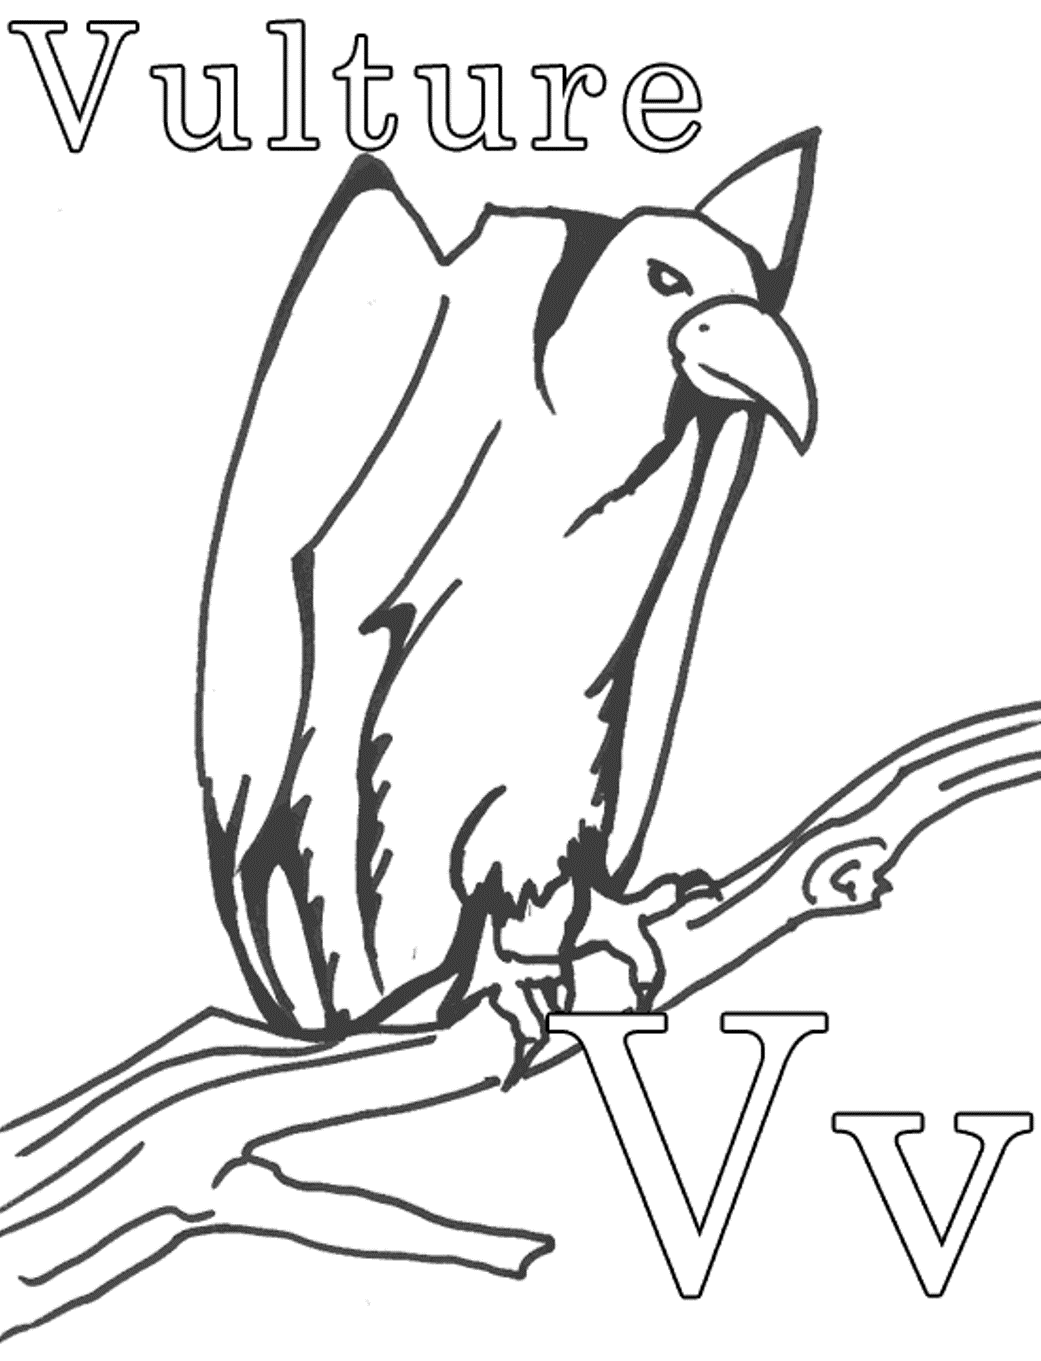 Vulture coloring #17, Download drawings